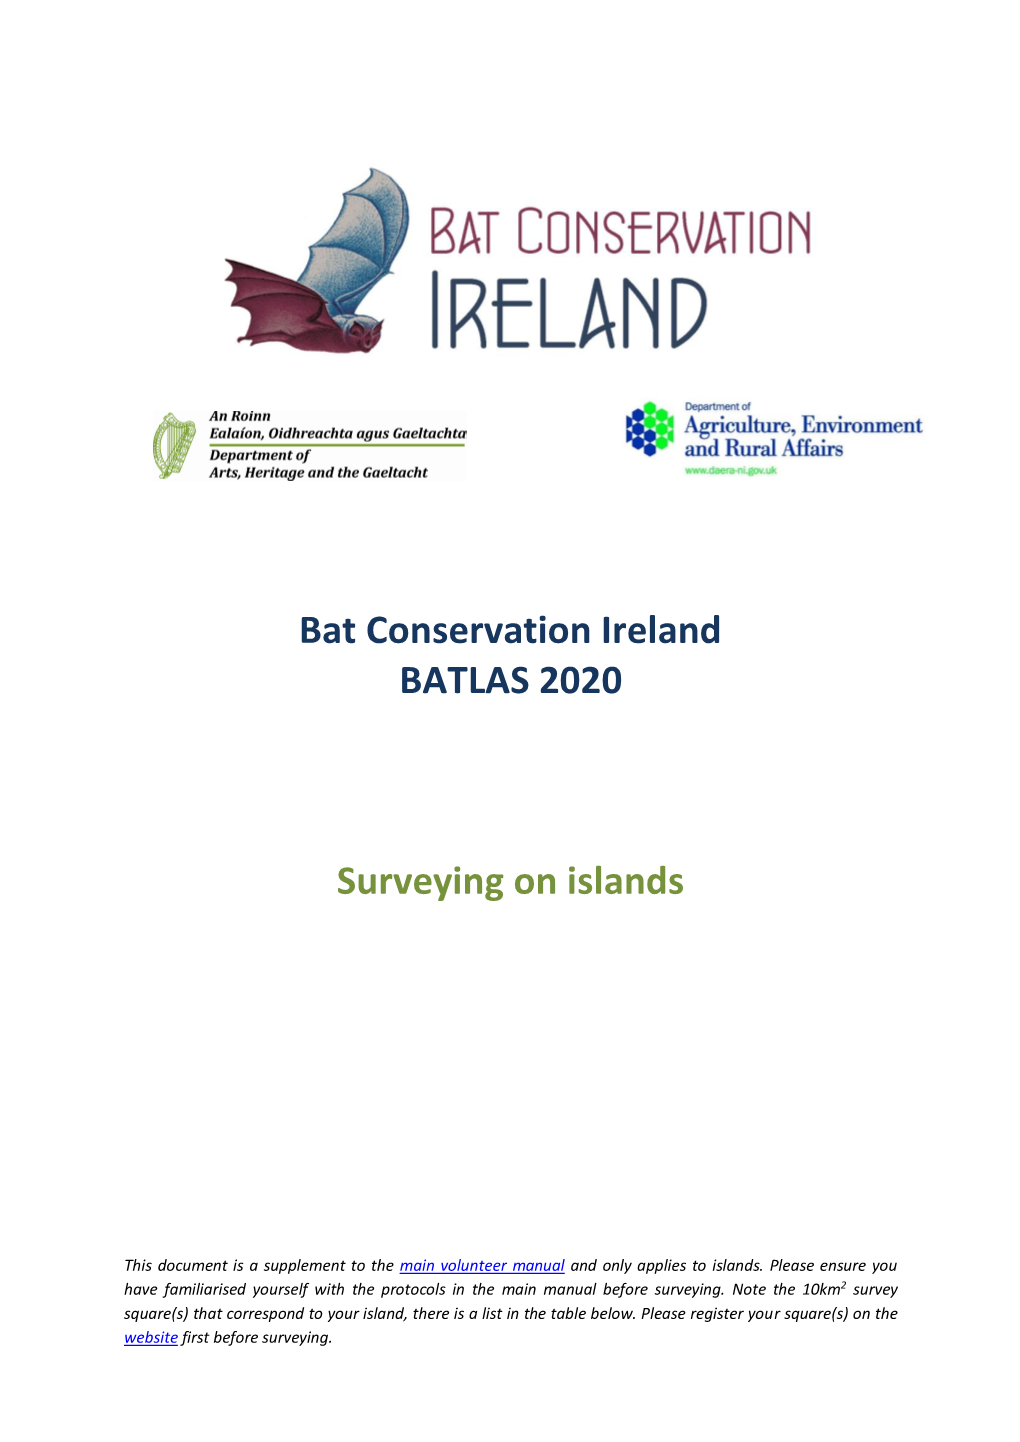 Bat Conservation Ireland BATLAS 2020 Surveying on Islands